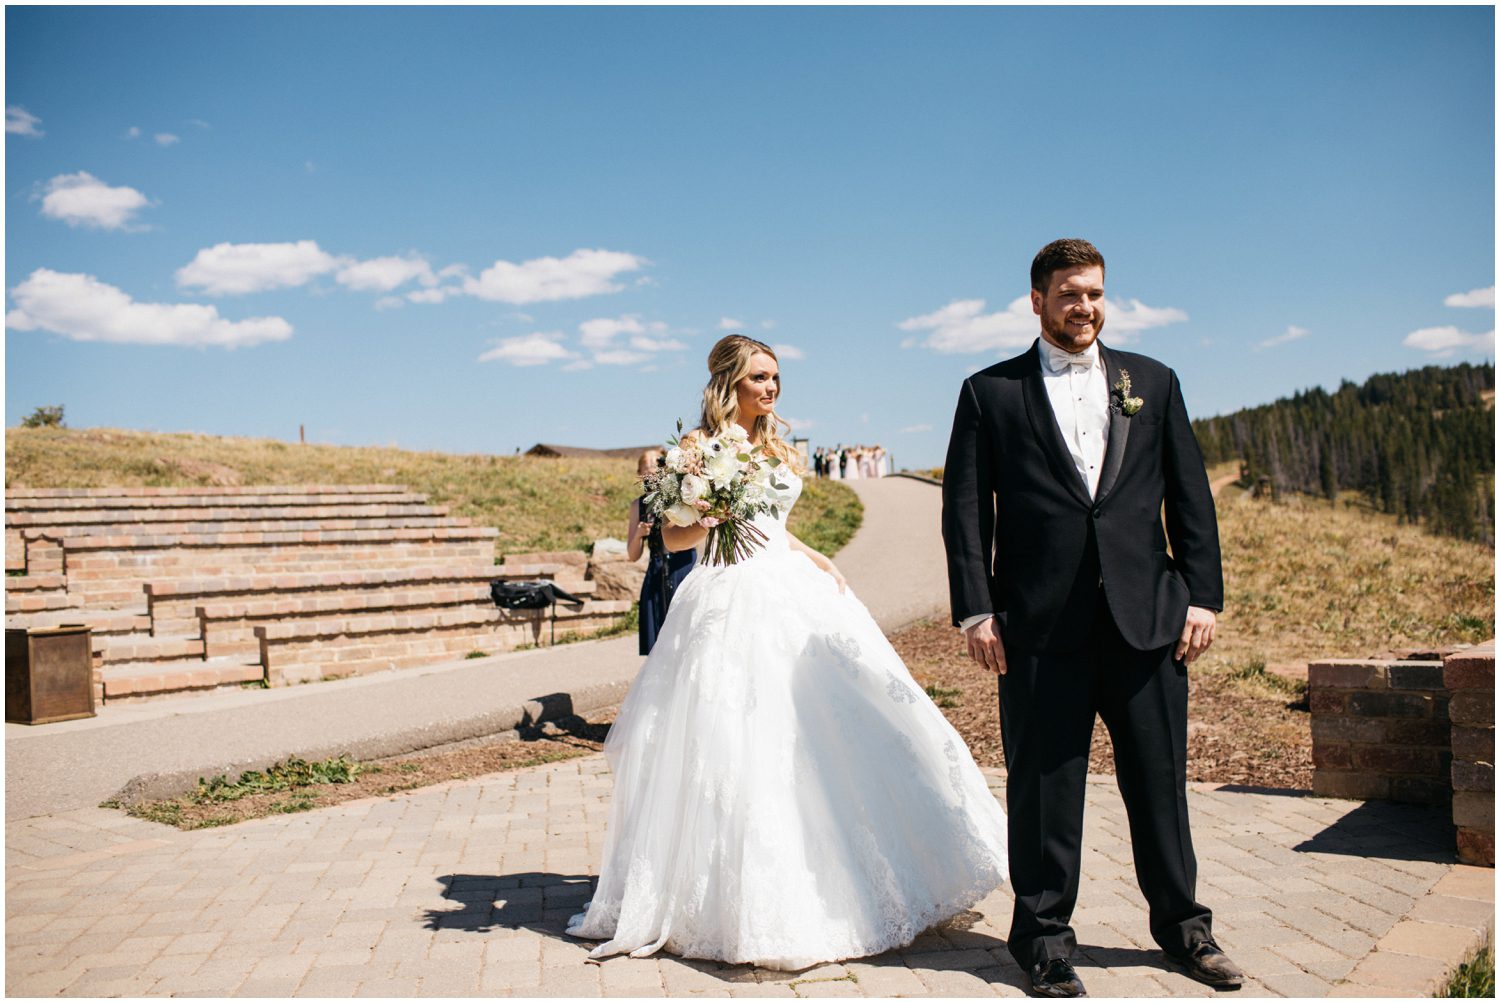 First look on Vail Mountain Colorado, Vail Colorado Wedding Photos, Donovan Pavilion Vail Colorado